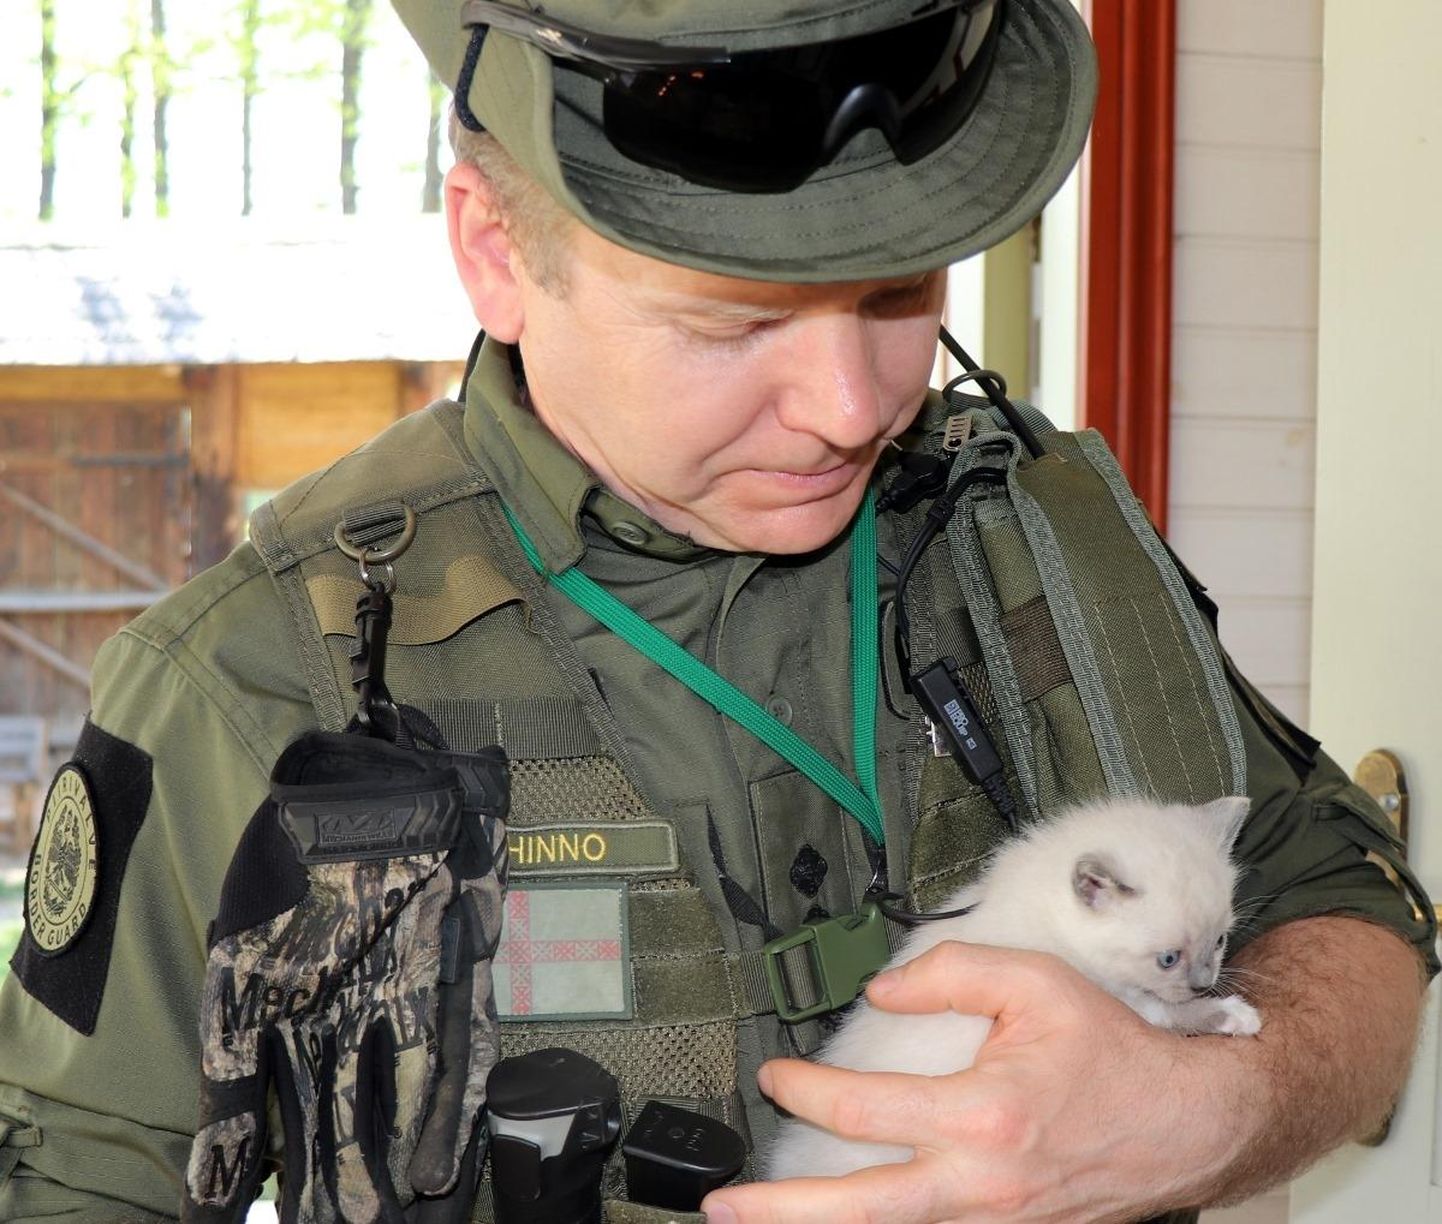 Piusa kordoni juht Valmar Hinno koos kassipojaga.
FOTO: Politsei